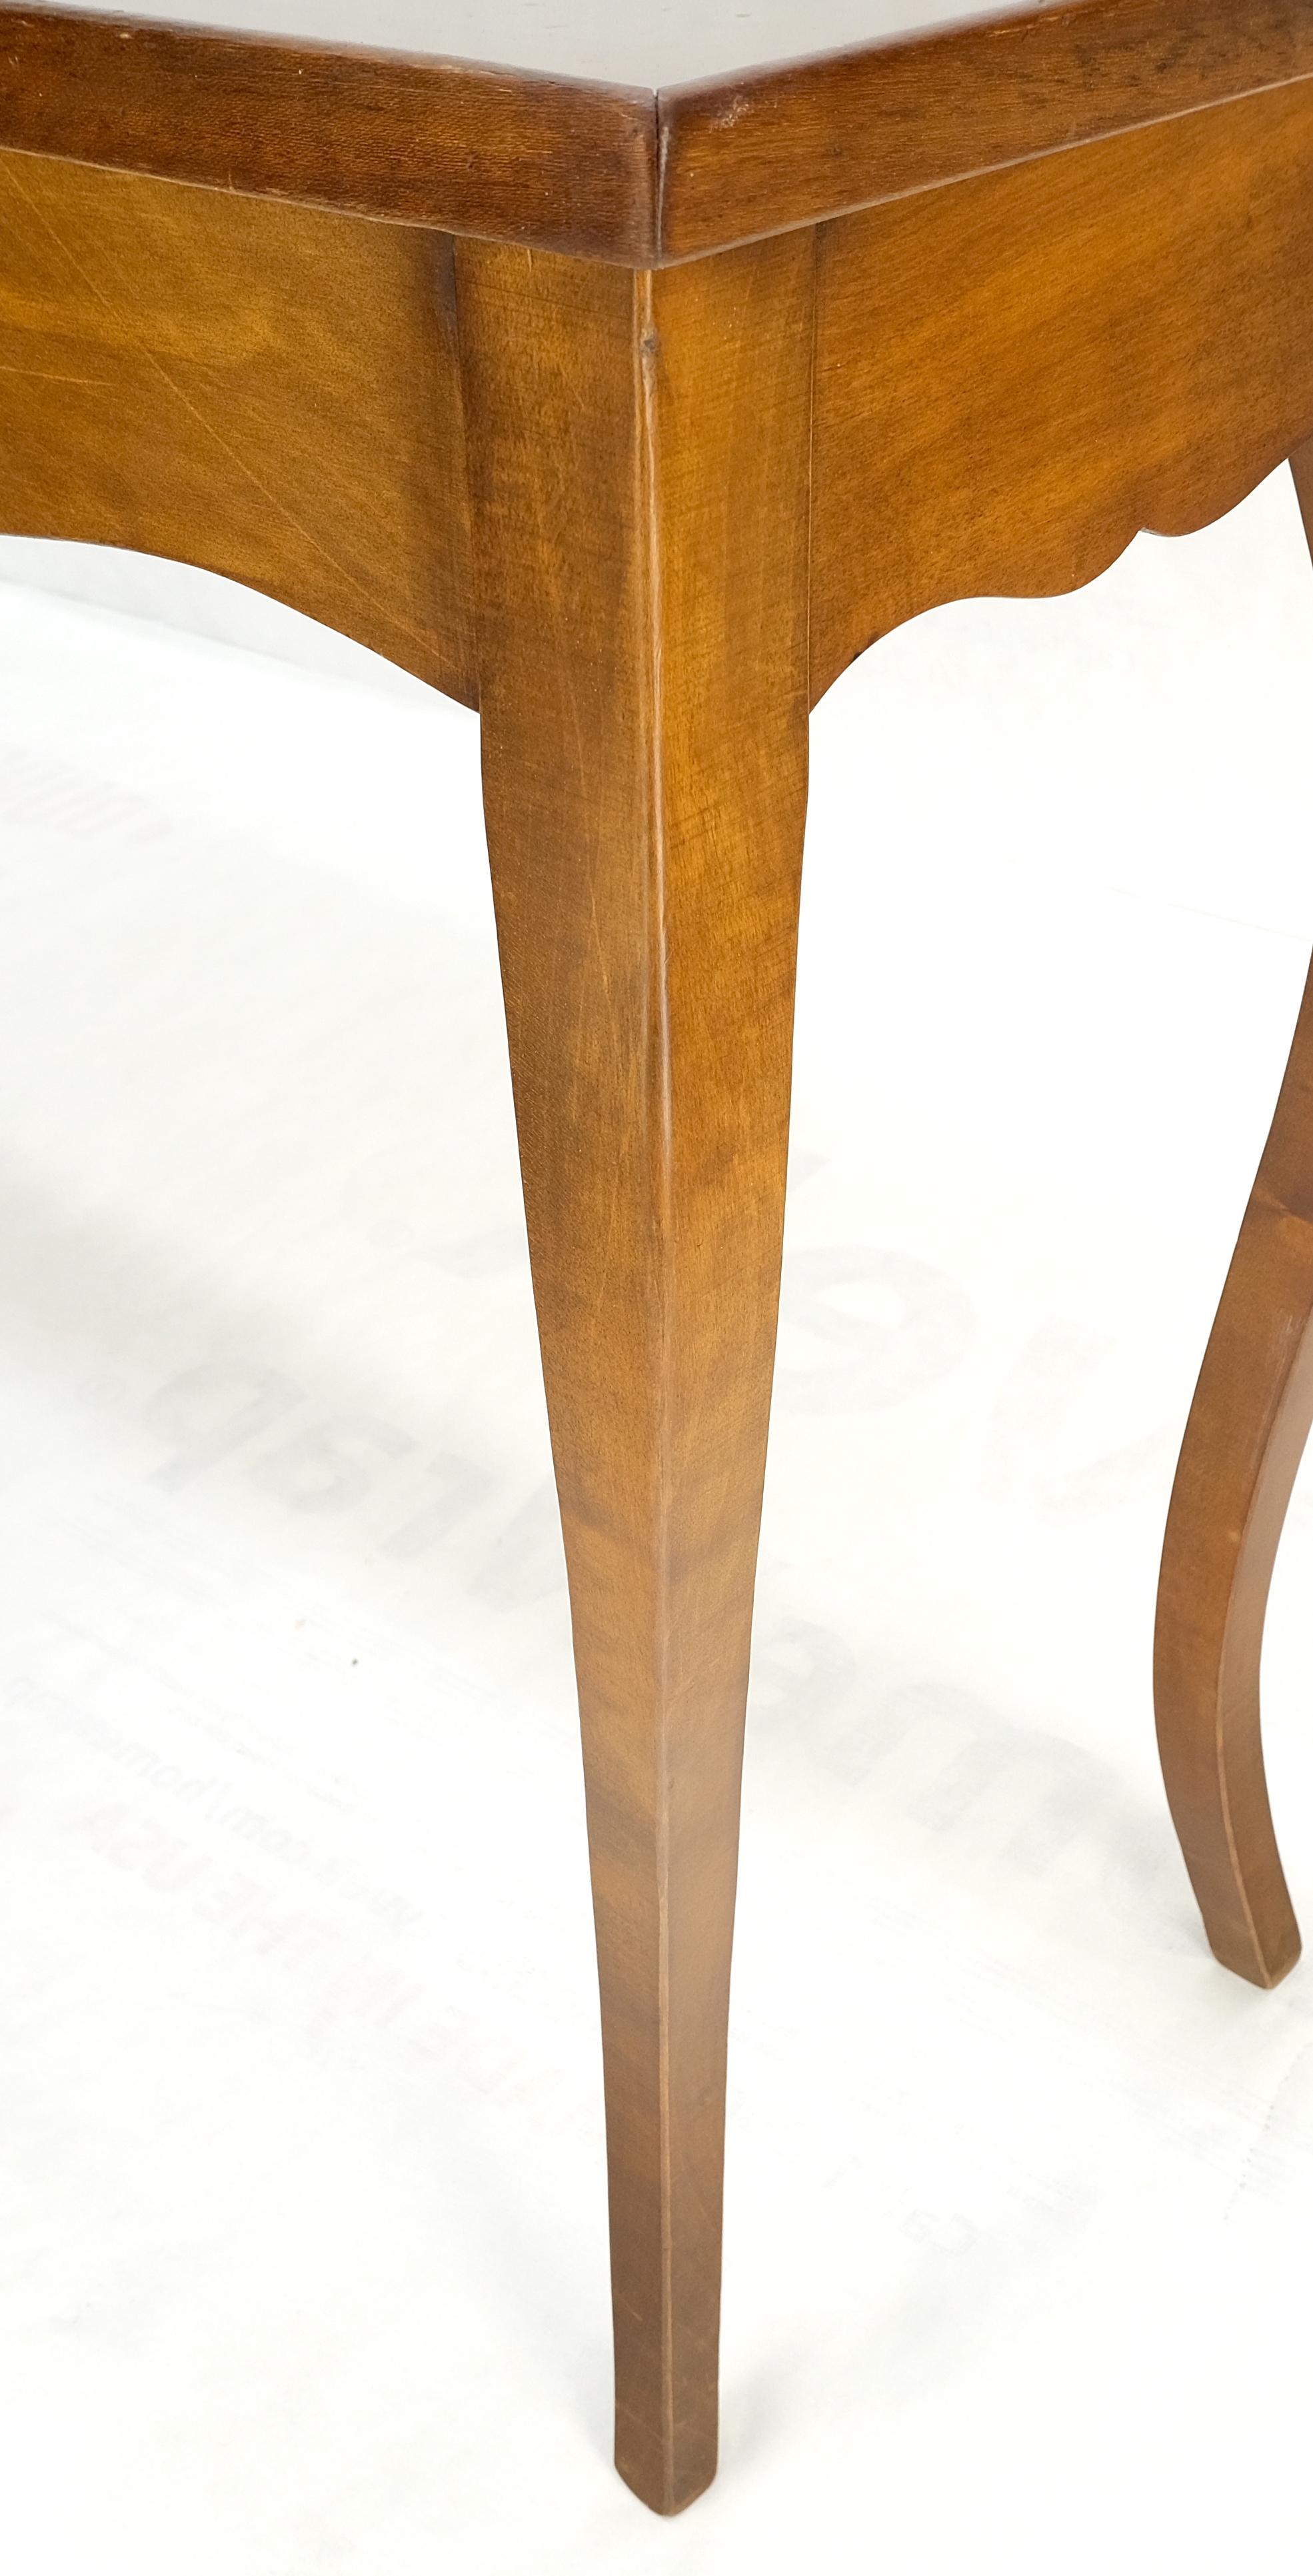 20th Century Parquetry Top Cabriole Leg Decorative Italian Modern Walnut Console Sofa Table For Sale